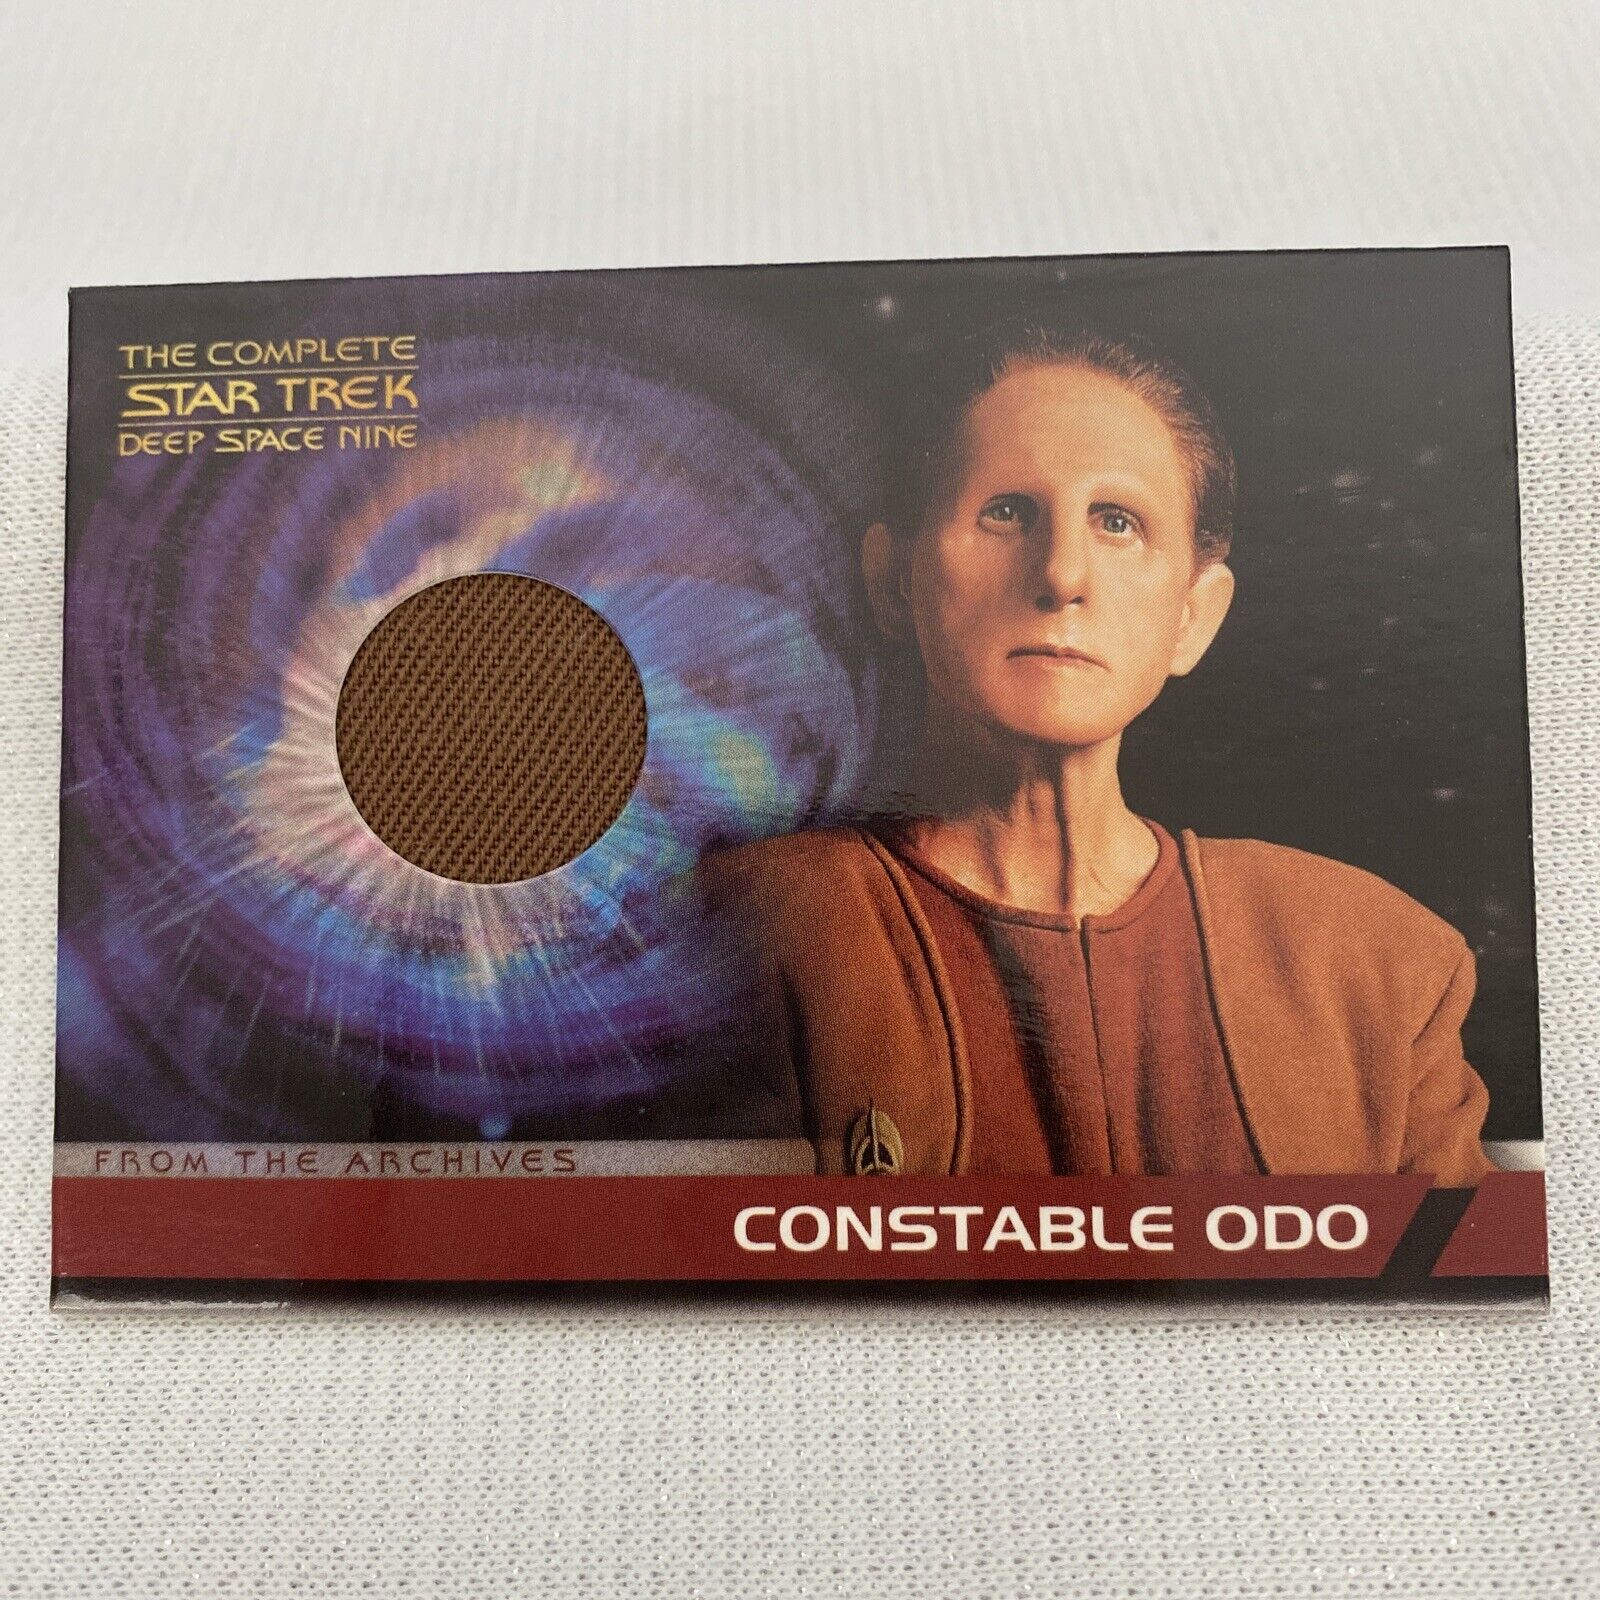 Star Trek COMPLETE DEEP SPACE NINE Constable ODO #CC5 COSTUME RELIC Card